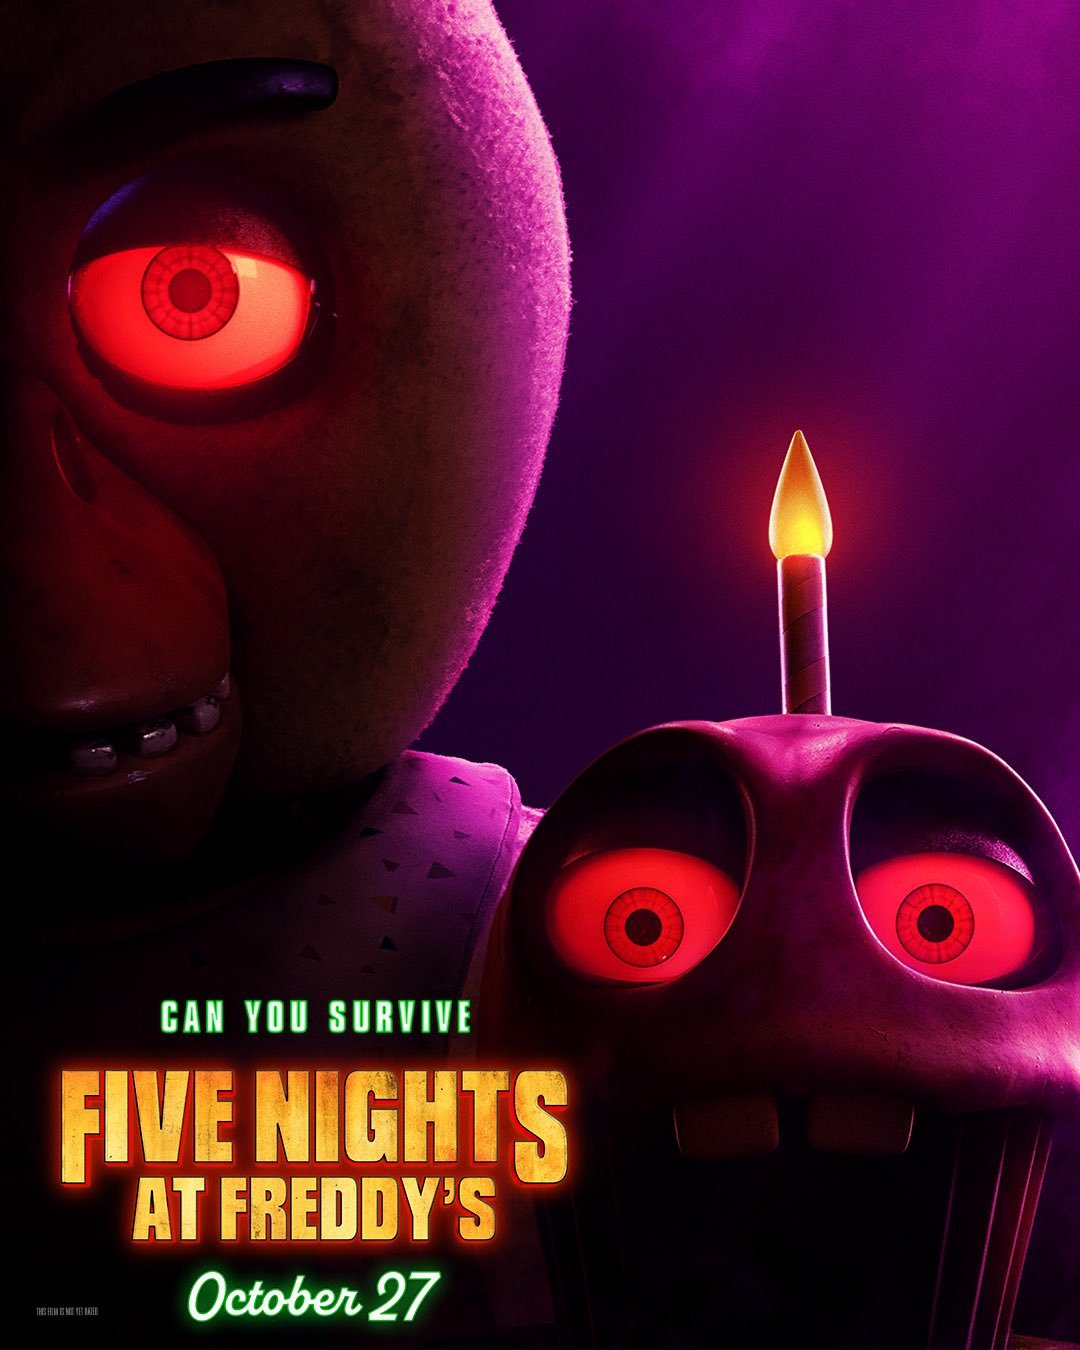 Q elenco de fnaf movie Five Nights at Freddy's Filme geral